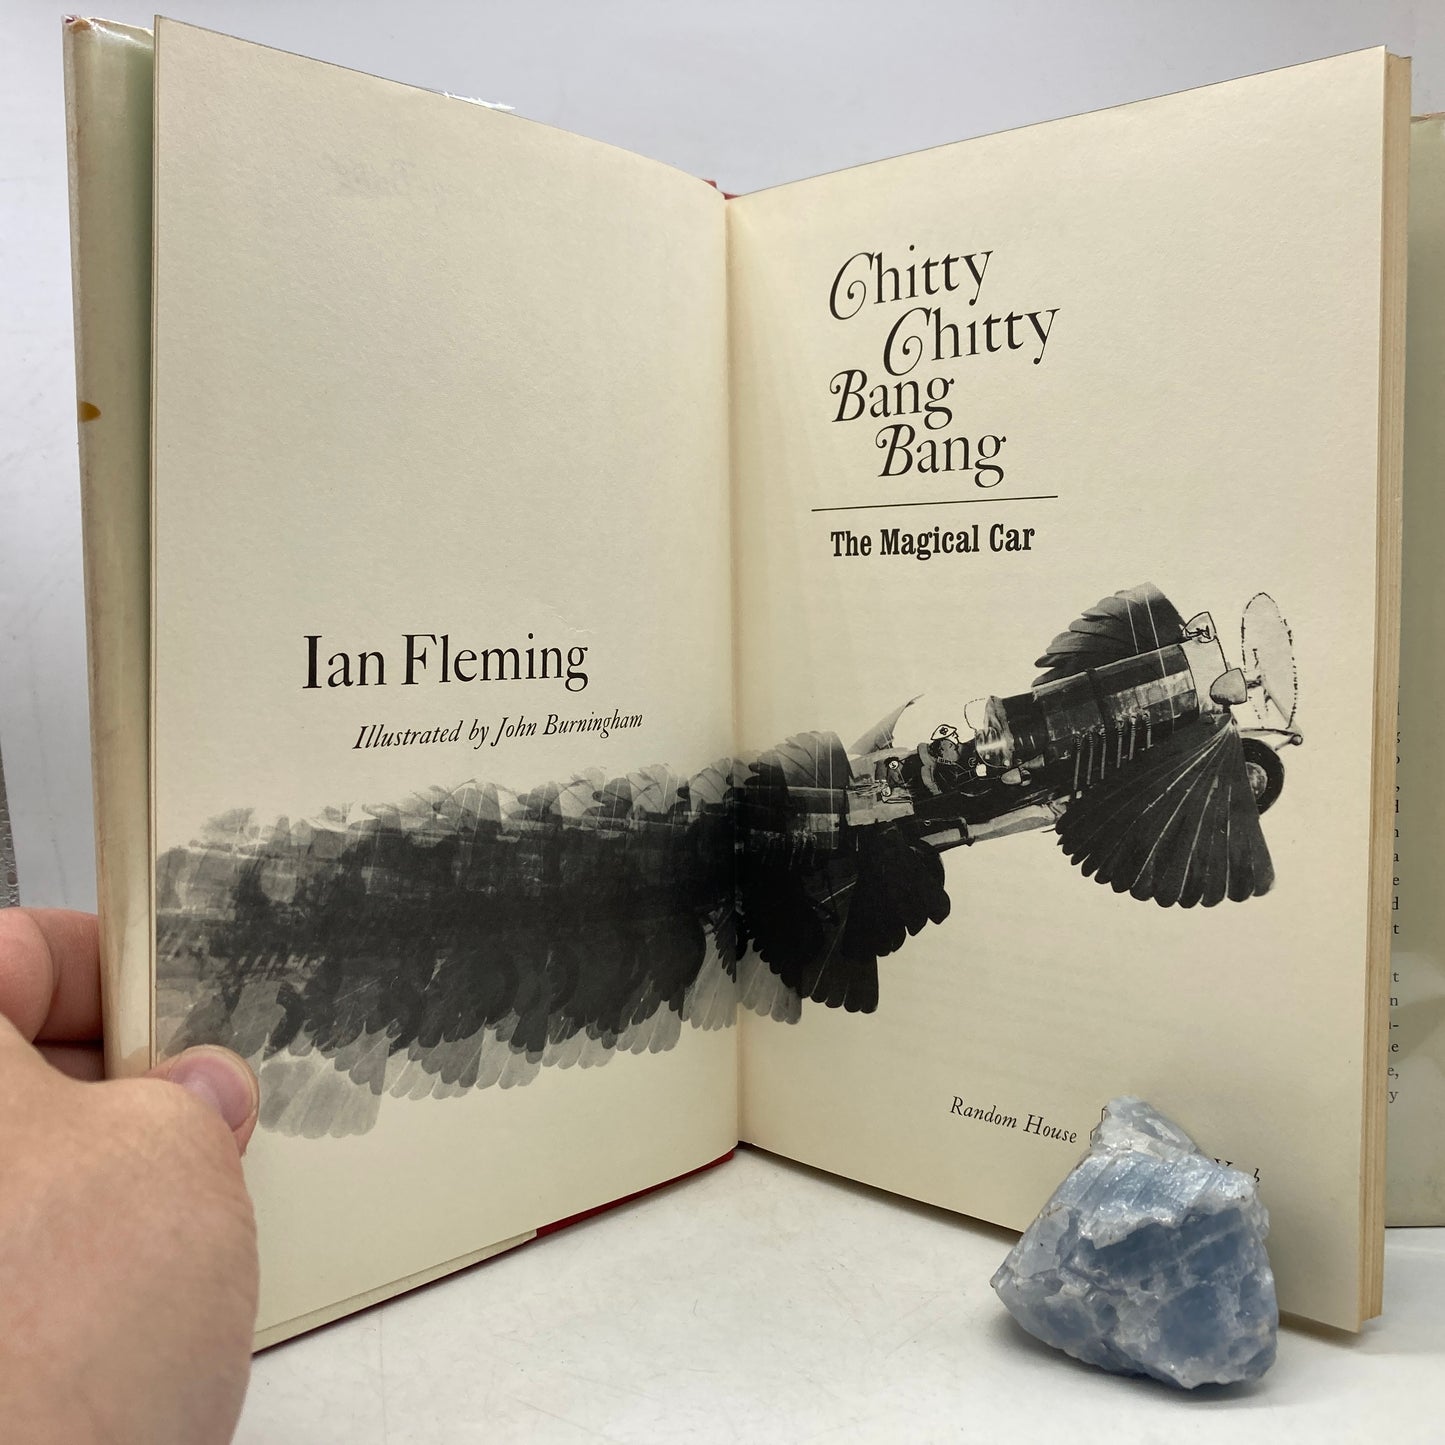 FLEMING, Ian "Chitty Chitty Bang Bang, The Magical Car" [Random House, 1964] 1st Edition